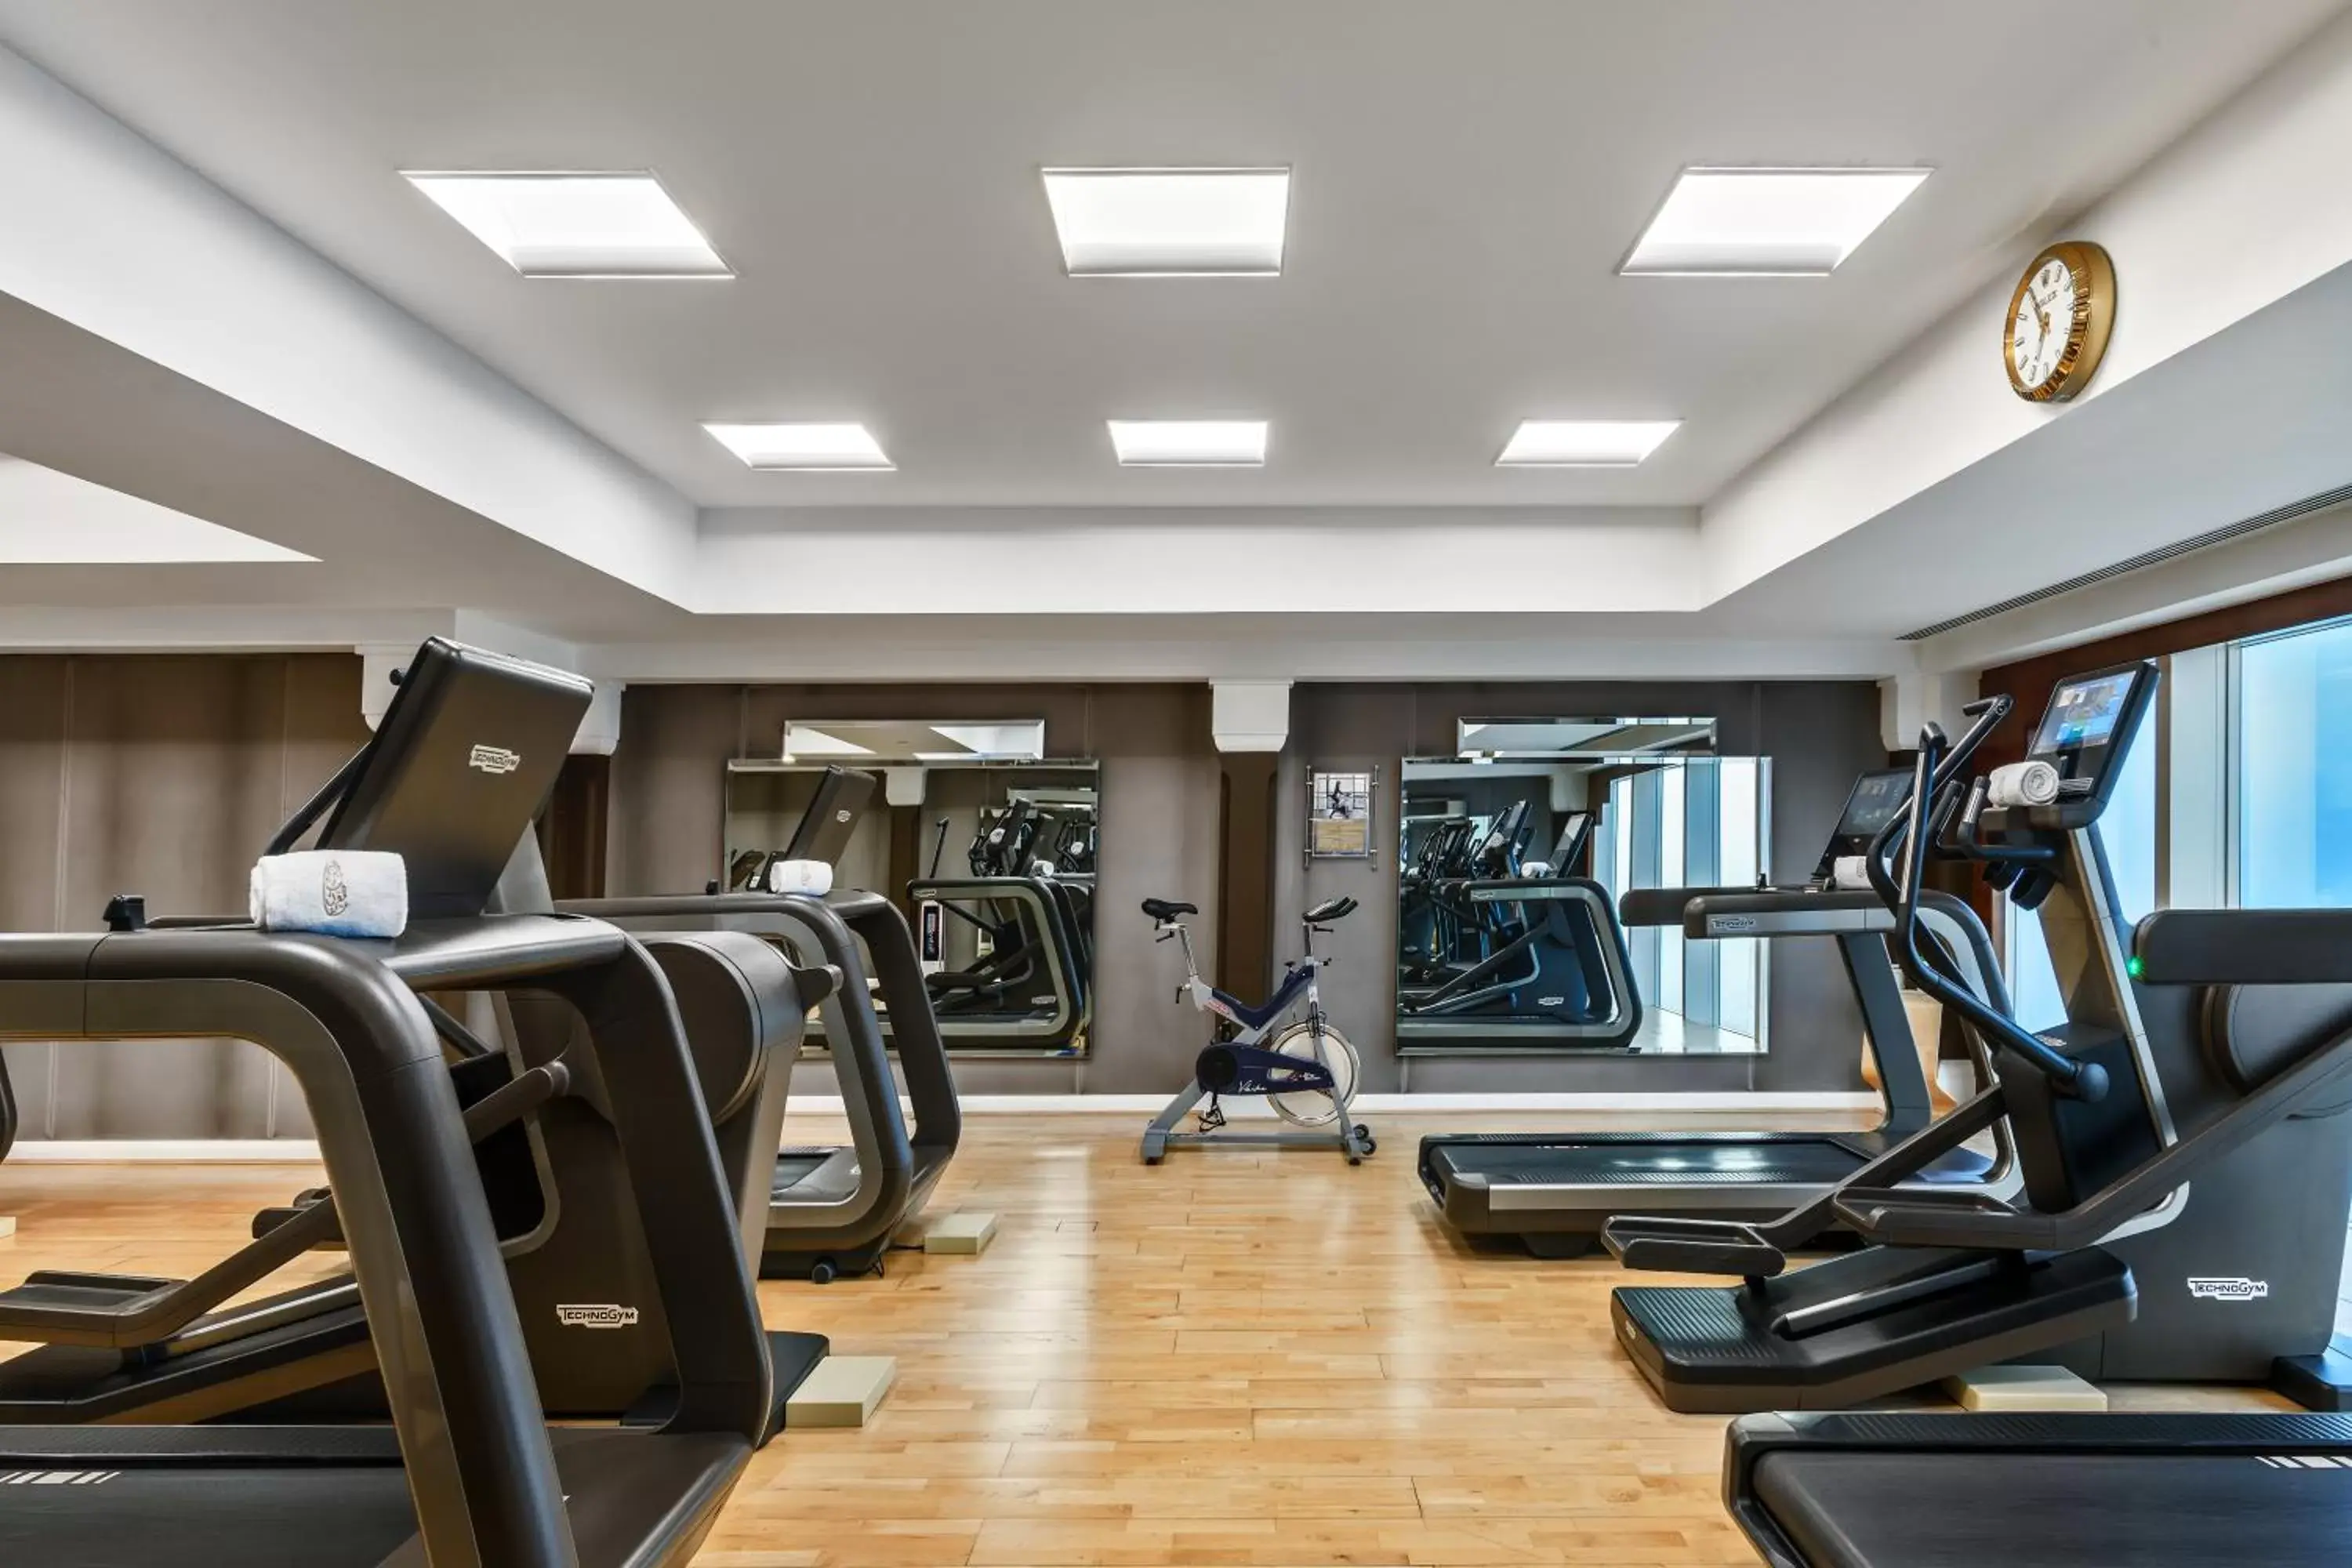 Fitness centre/facilities, Fitness Center/Facilities in Burj Al Arab Jumeirah